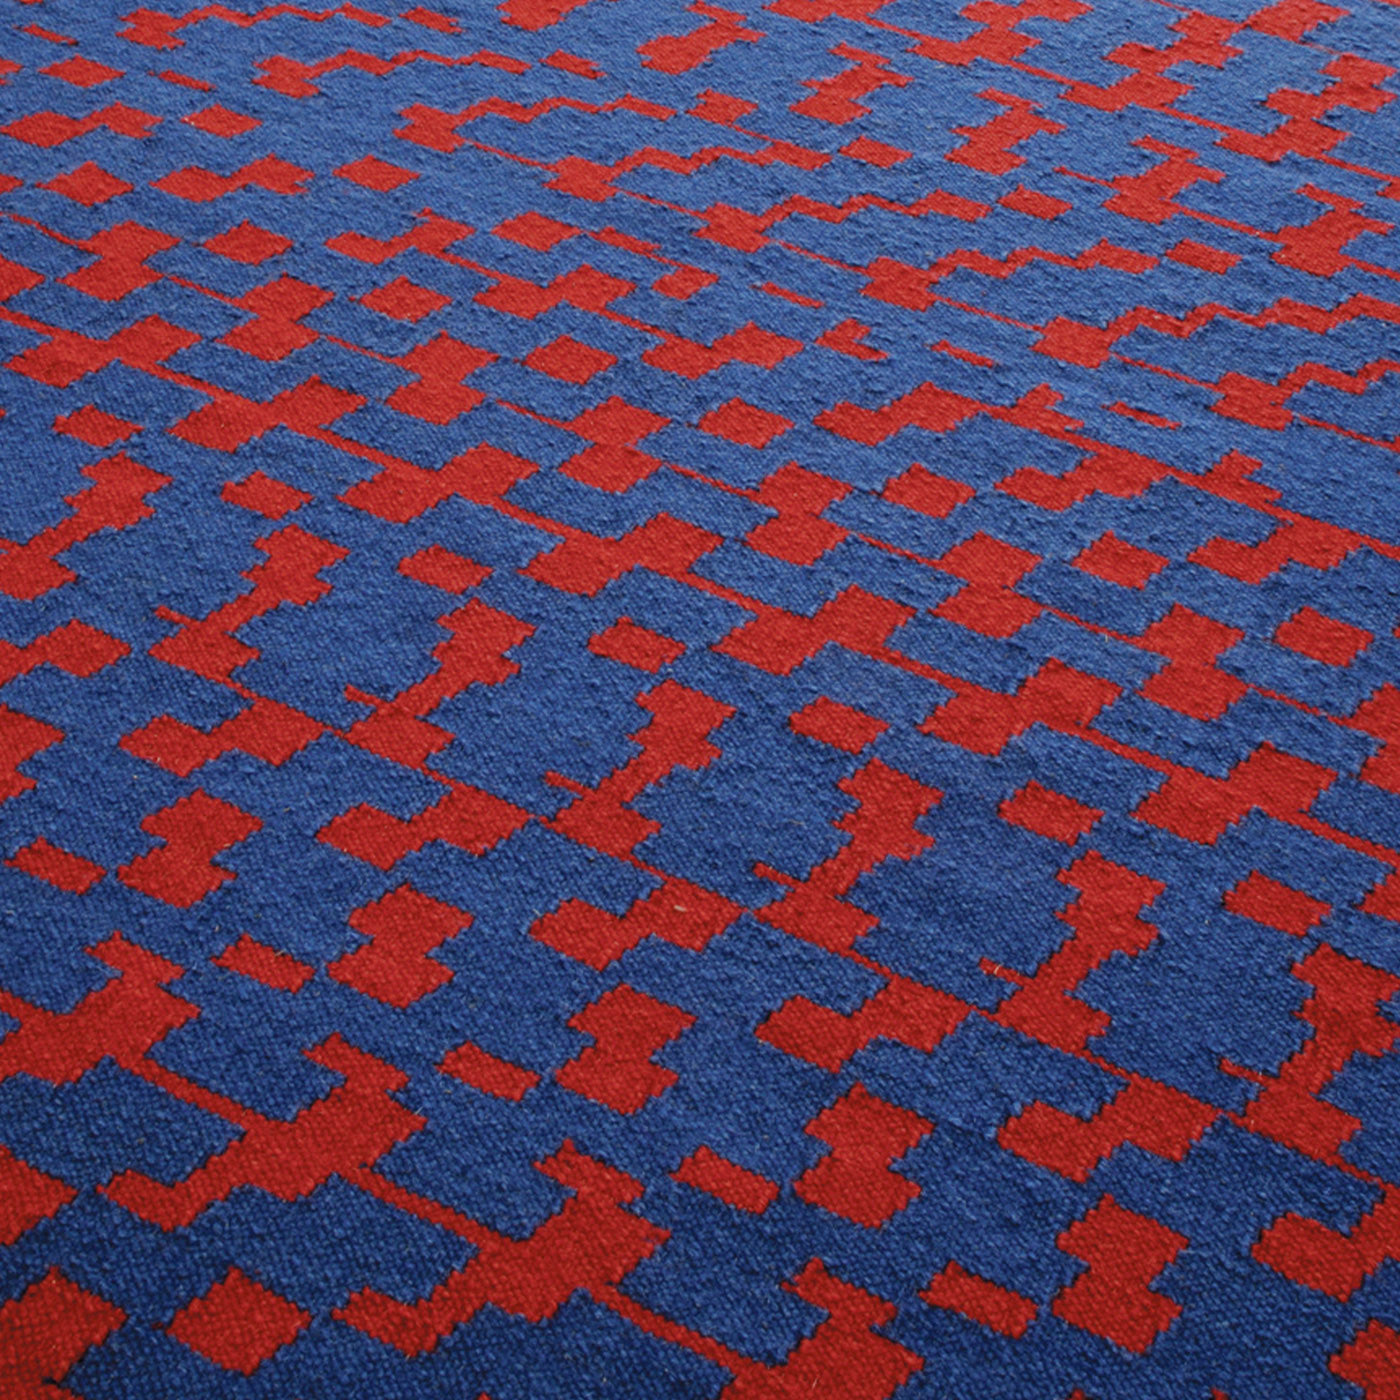 Fuoritempo Large Carpet - Alternative view 2